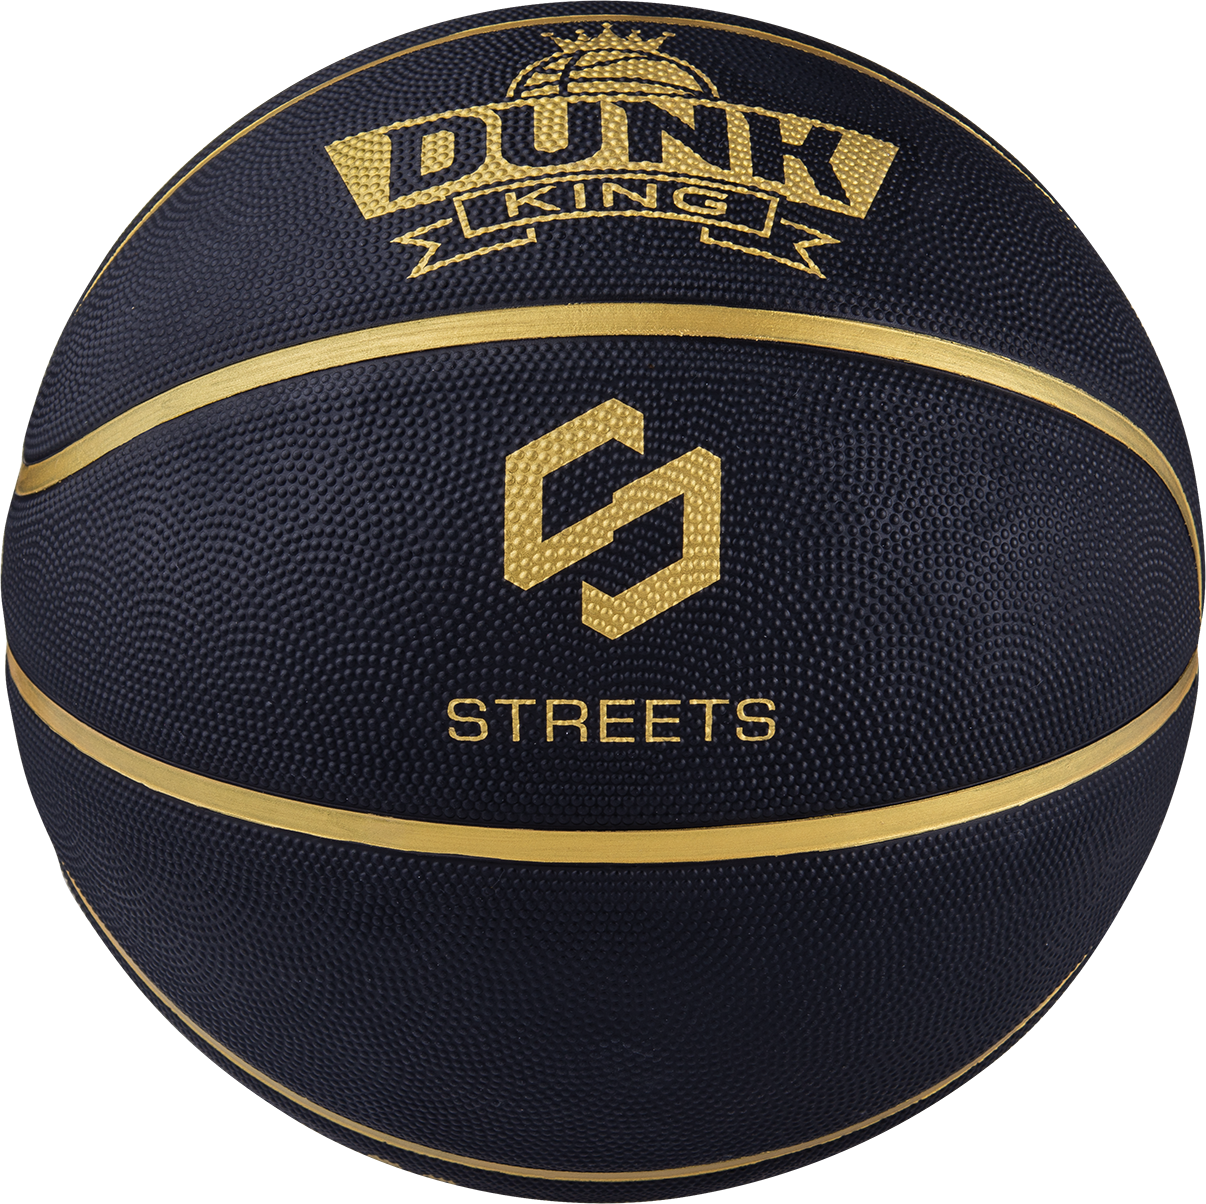 Мяч баскетбольный Jögel Streets Dunk King №7 (7)